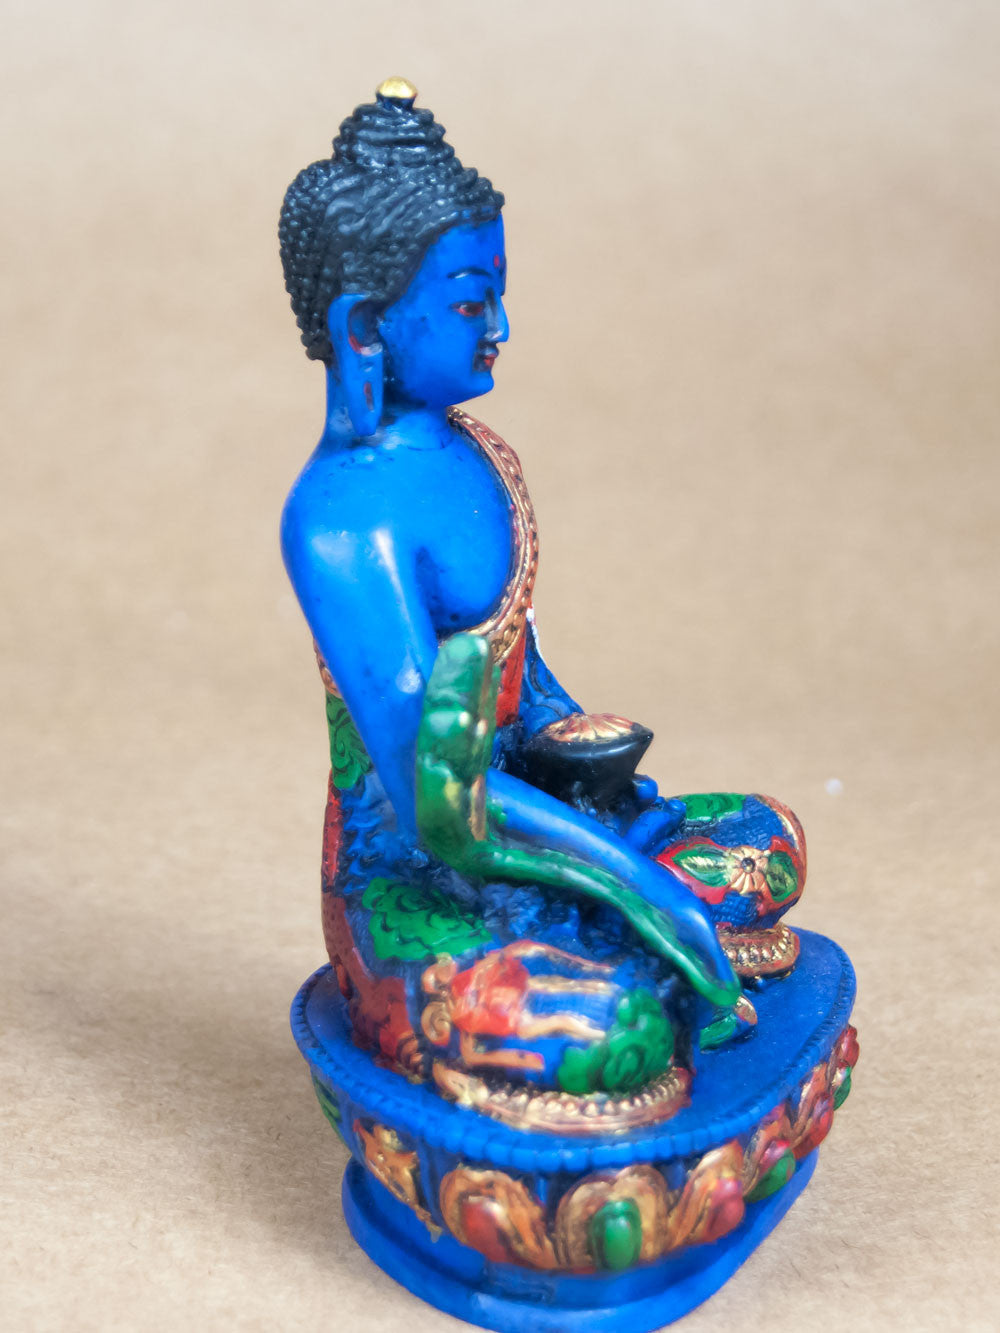 Buy Mishtienterprises 9 inch Gautam Buddha Meditating Statue showpiece Idol  Home décor Wedding Anniversary Office Gifts(Orange Black) Online at Low  Prices in India - Amazon.in